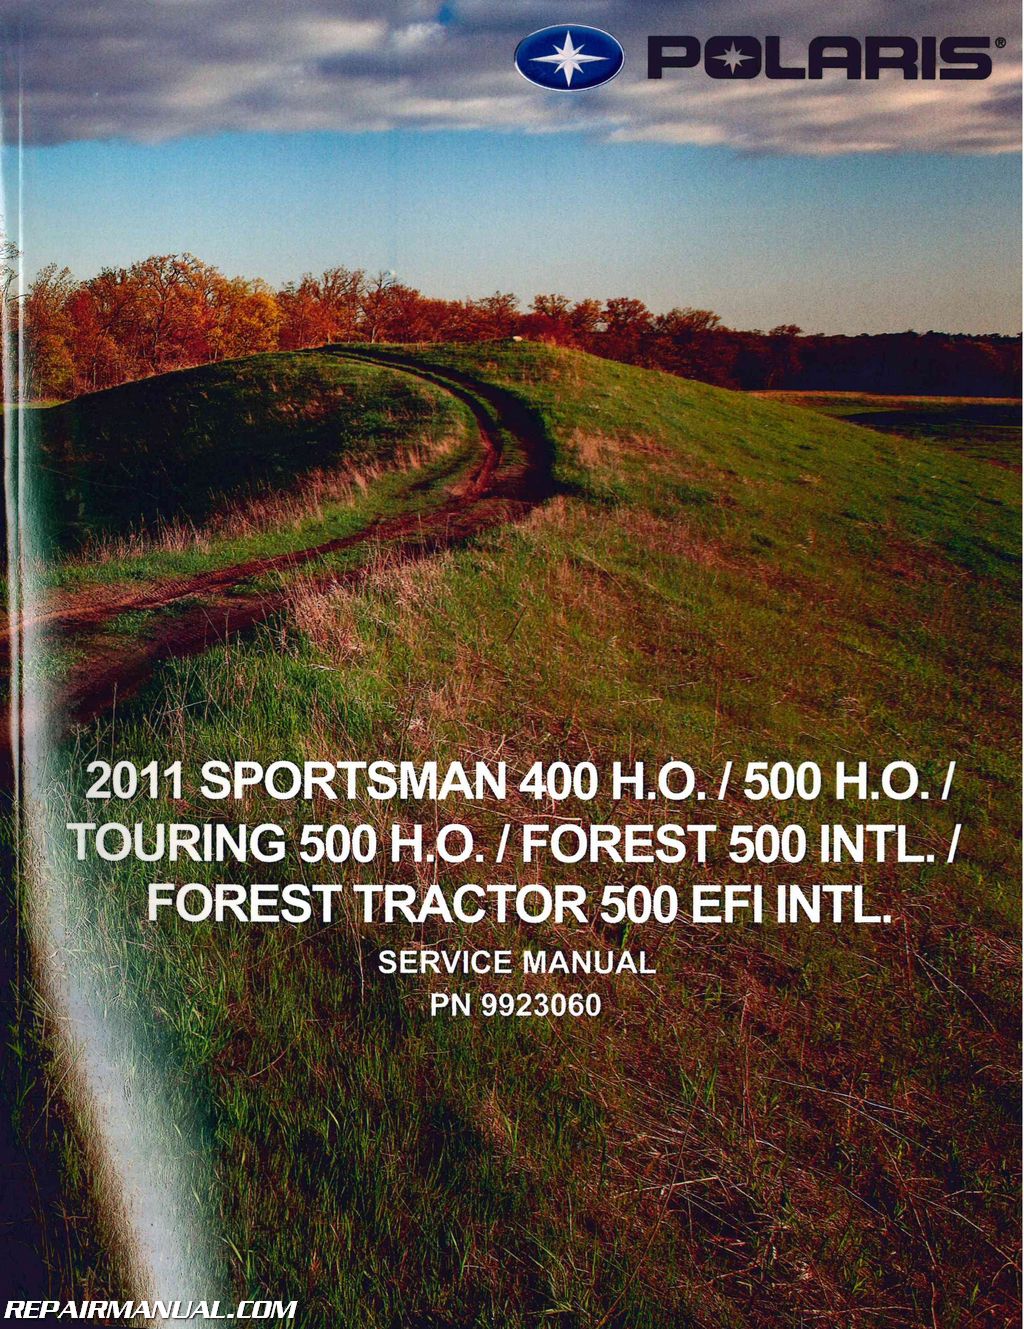 service manual for 2007 polaris sportsman 500